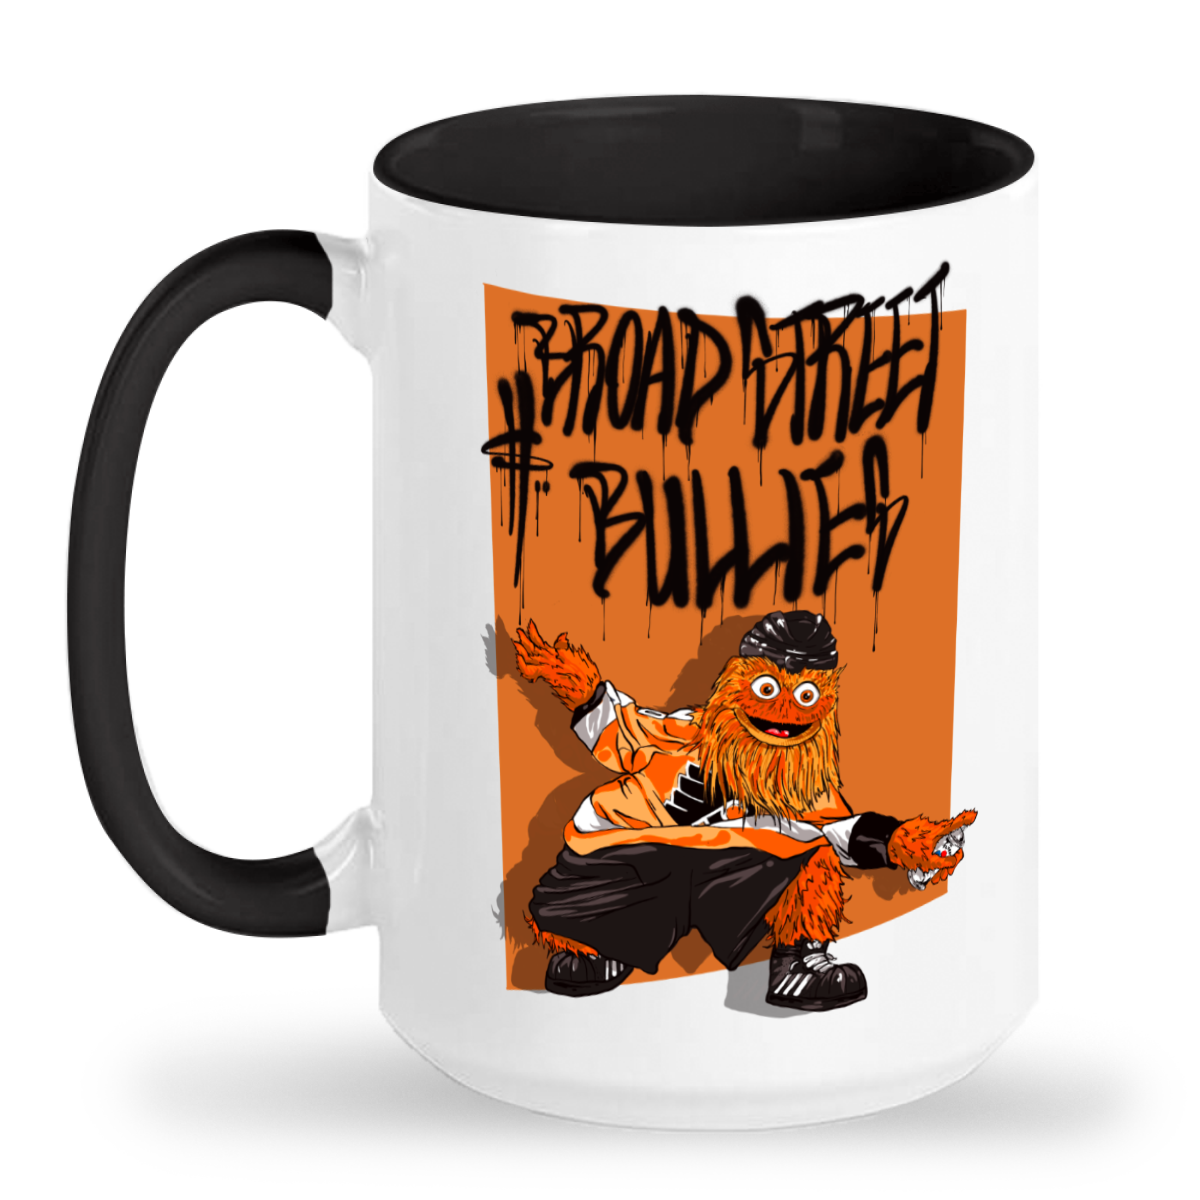 Broad Street Bullies Mug Large (Ceramic)